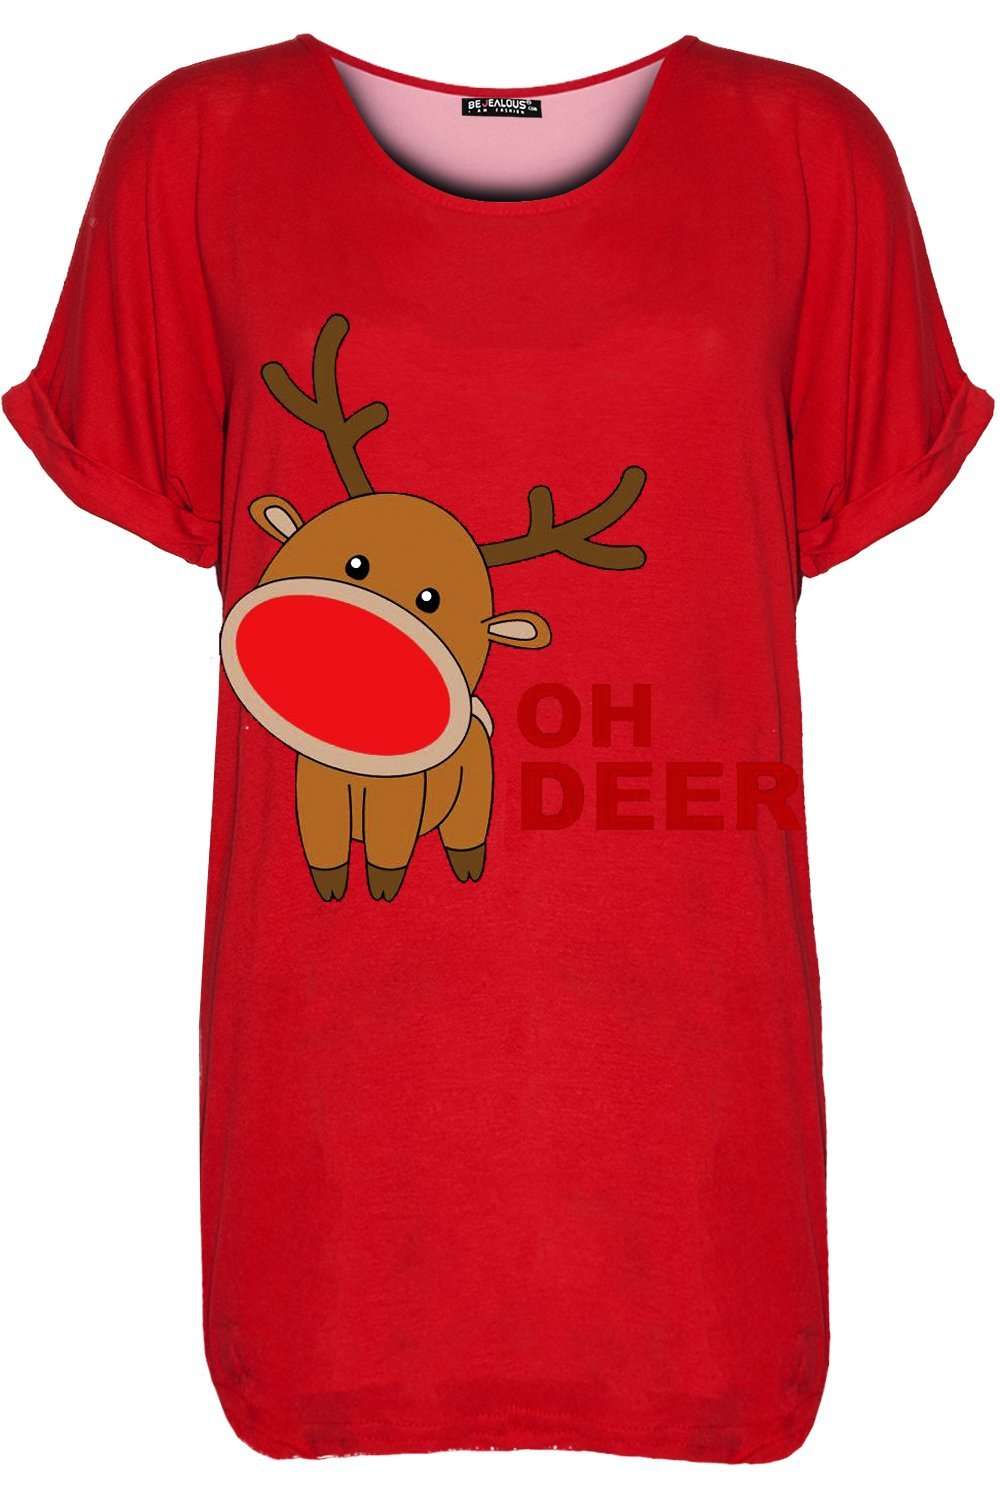 Oversized Rolled Sleeve Reindeer Print Christmas TShirt - bejealous-com